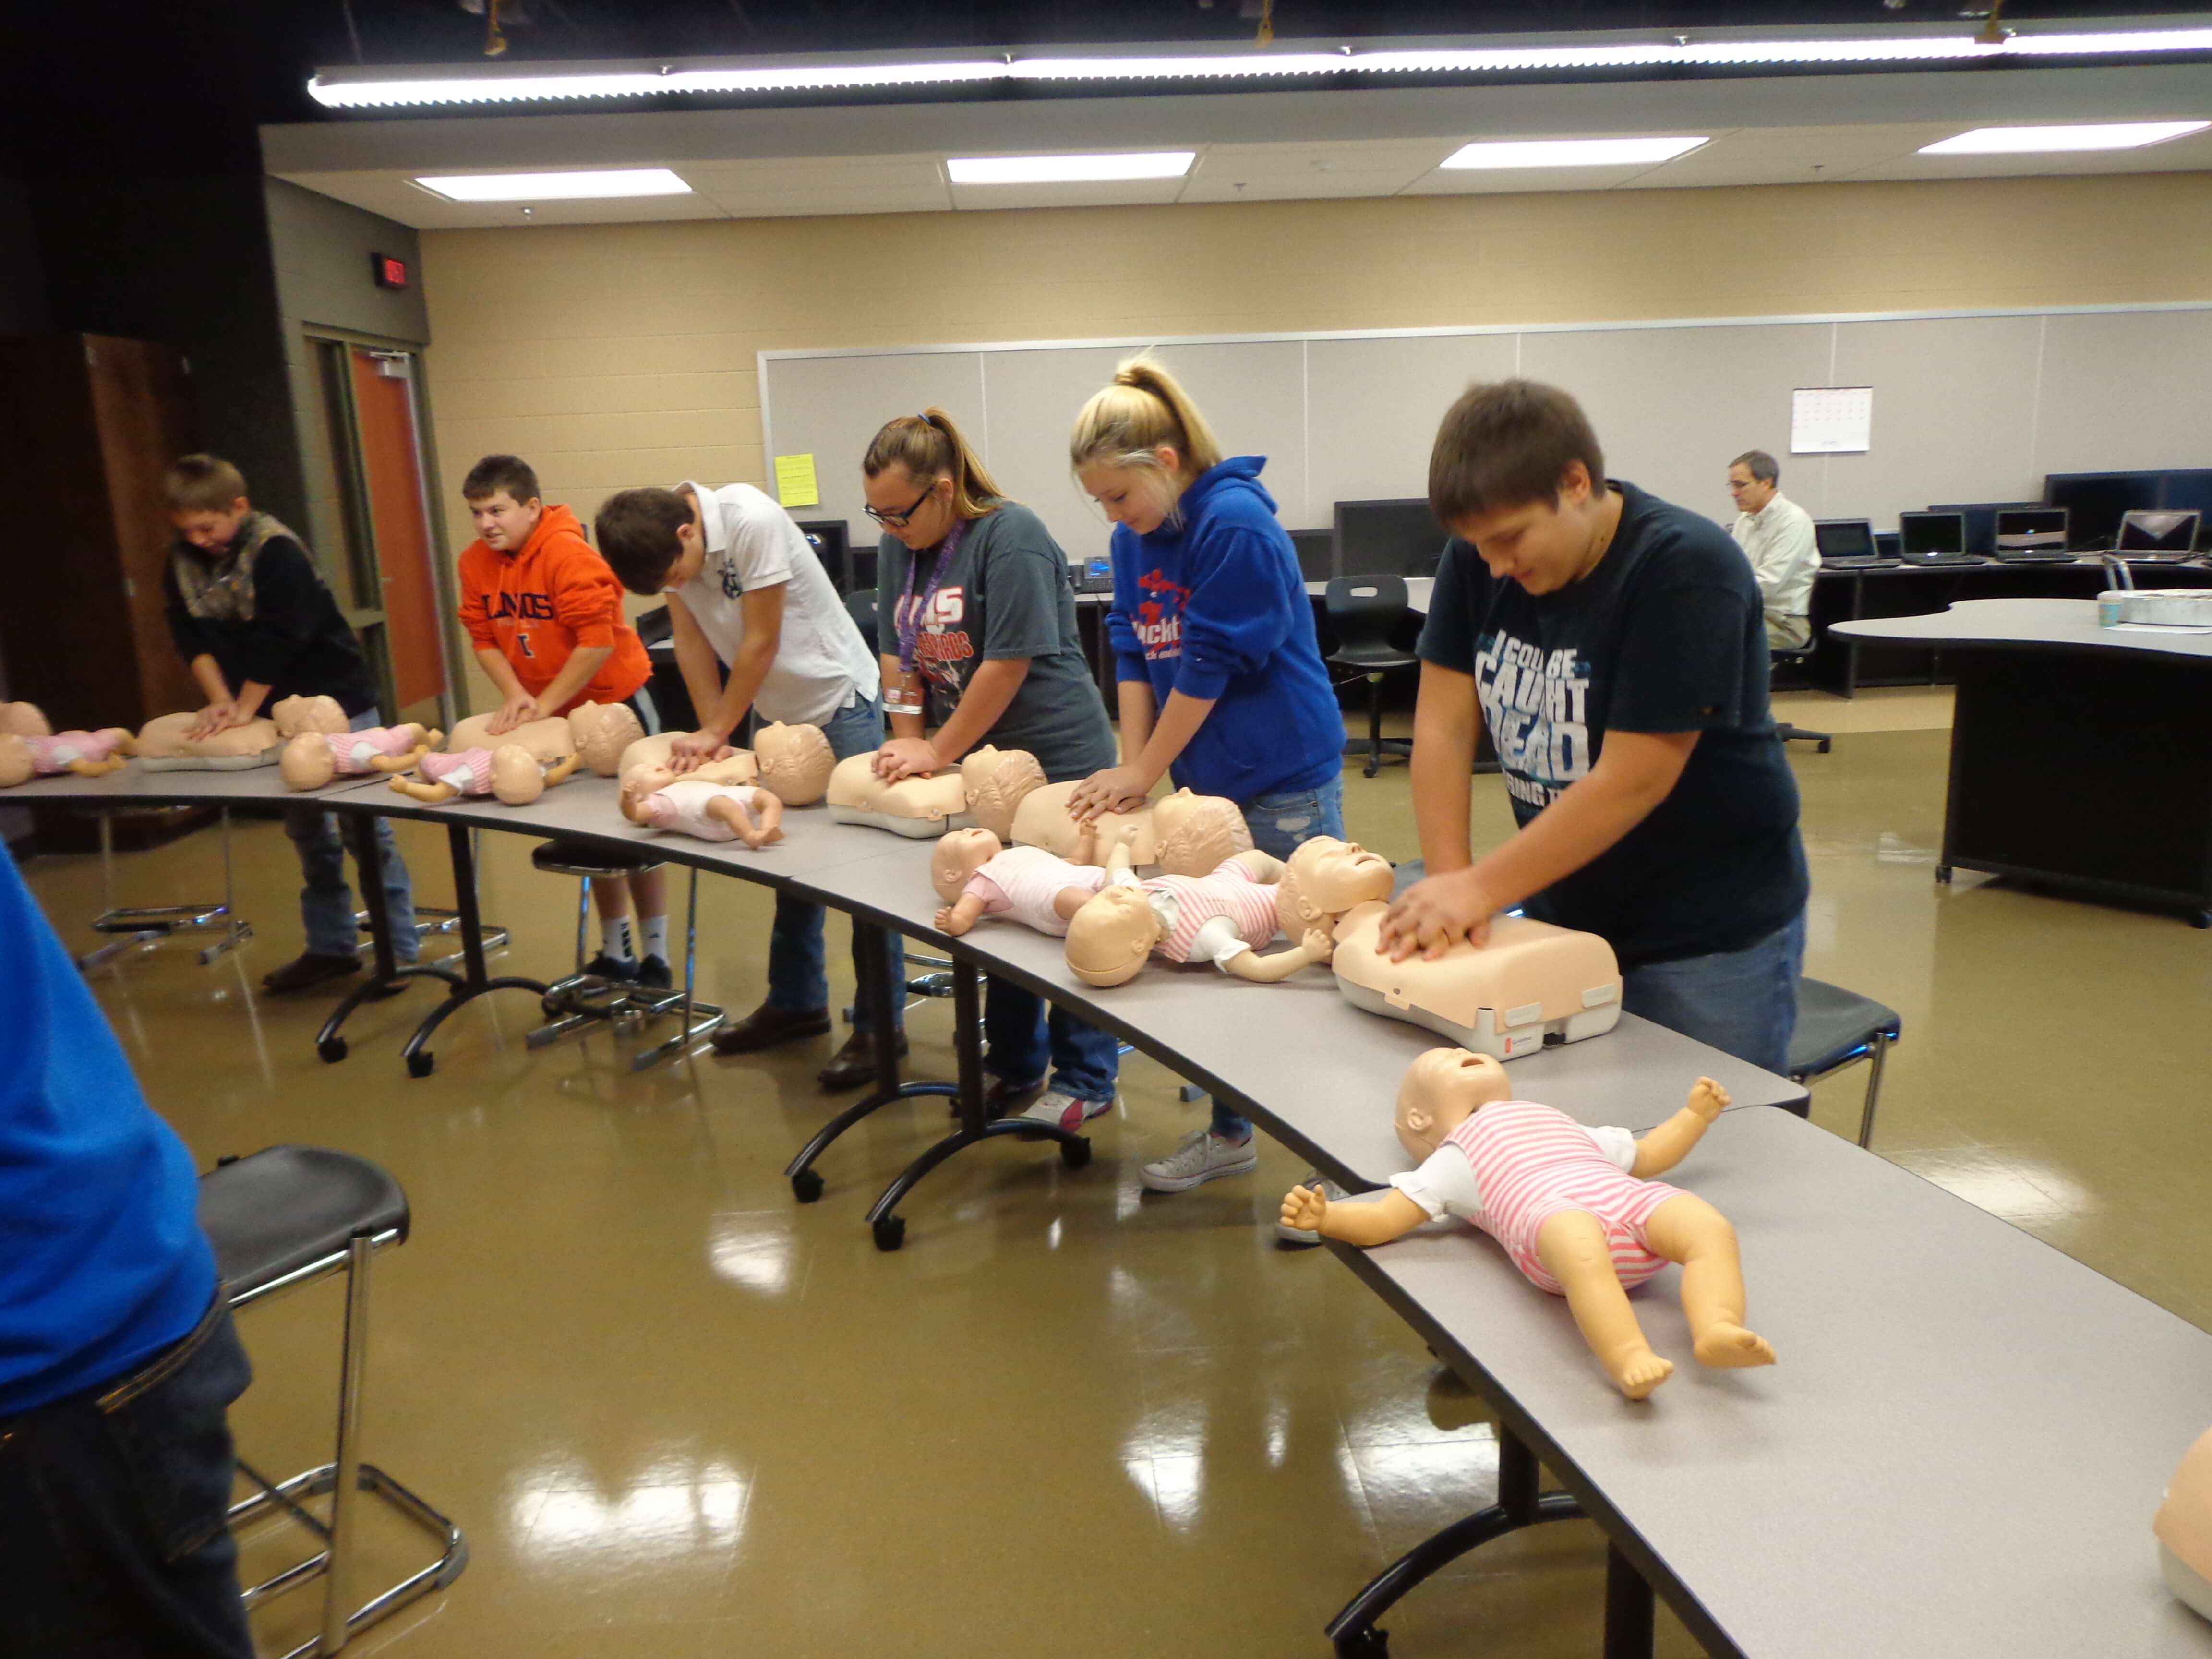 teens practicing CPR on baby dummies